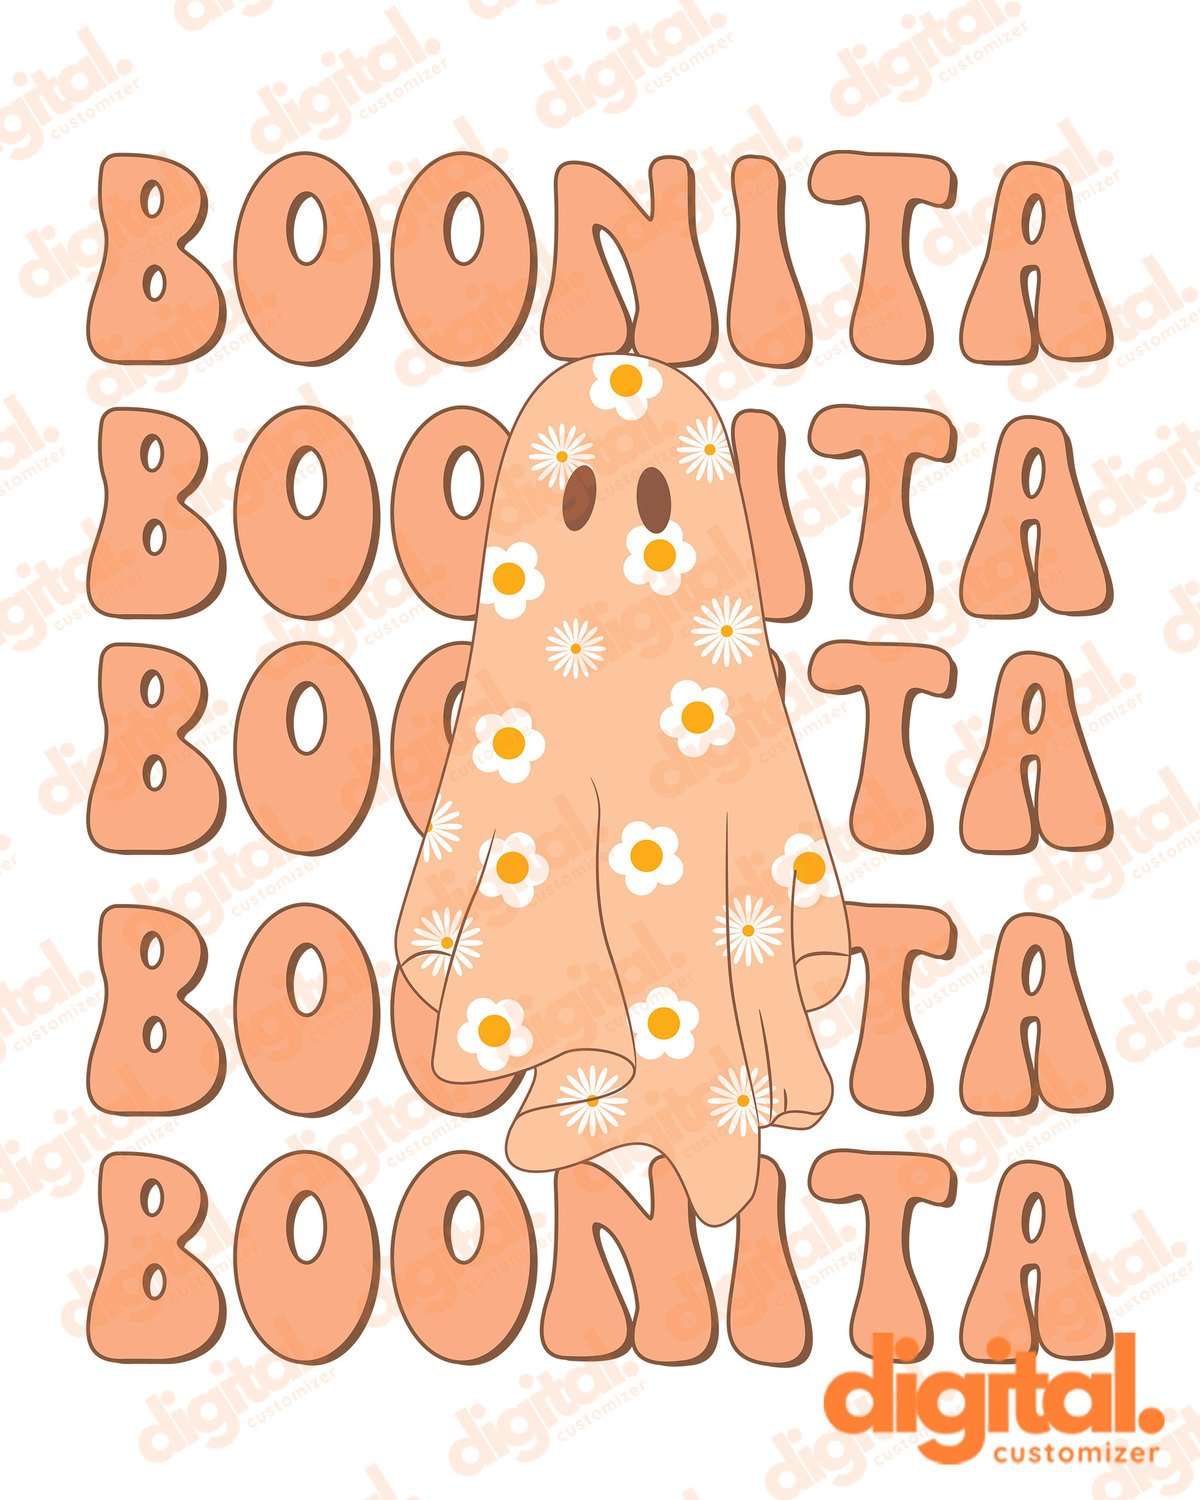 Boonita Ghost Halloween T-shirt Sweatshirt Hoodie